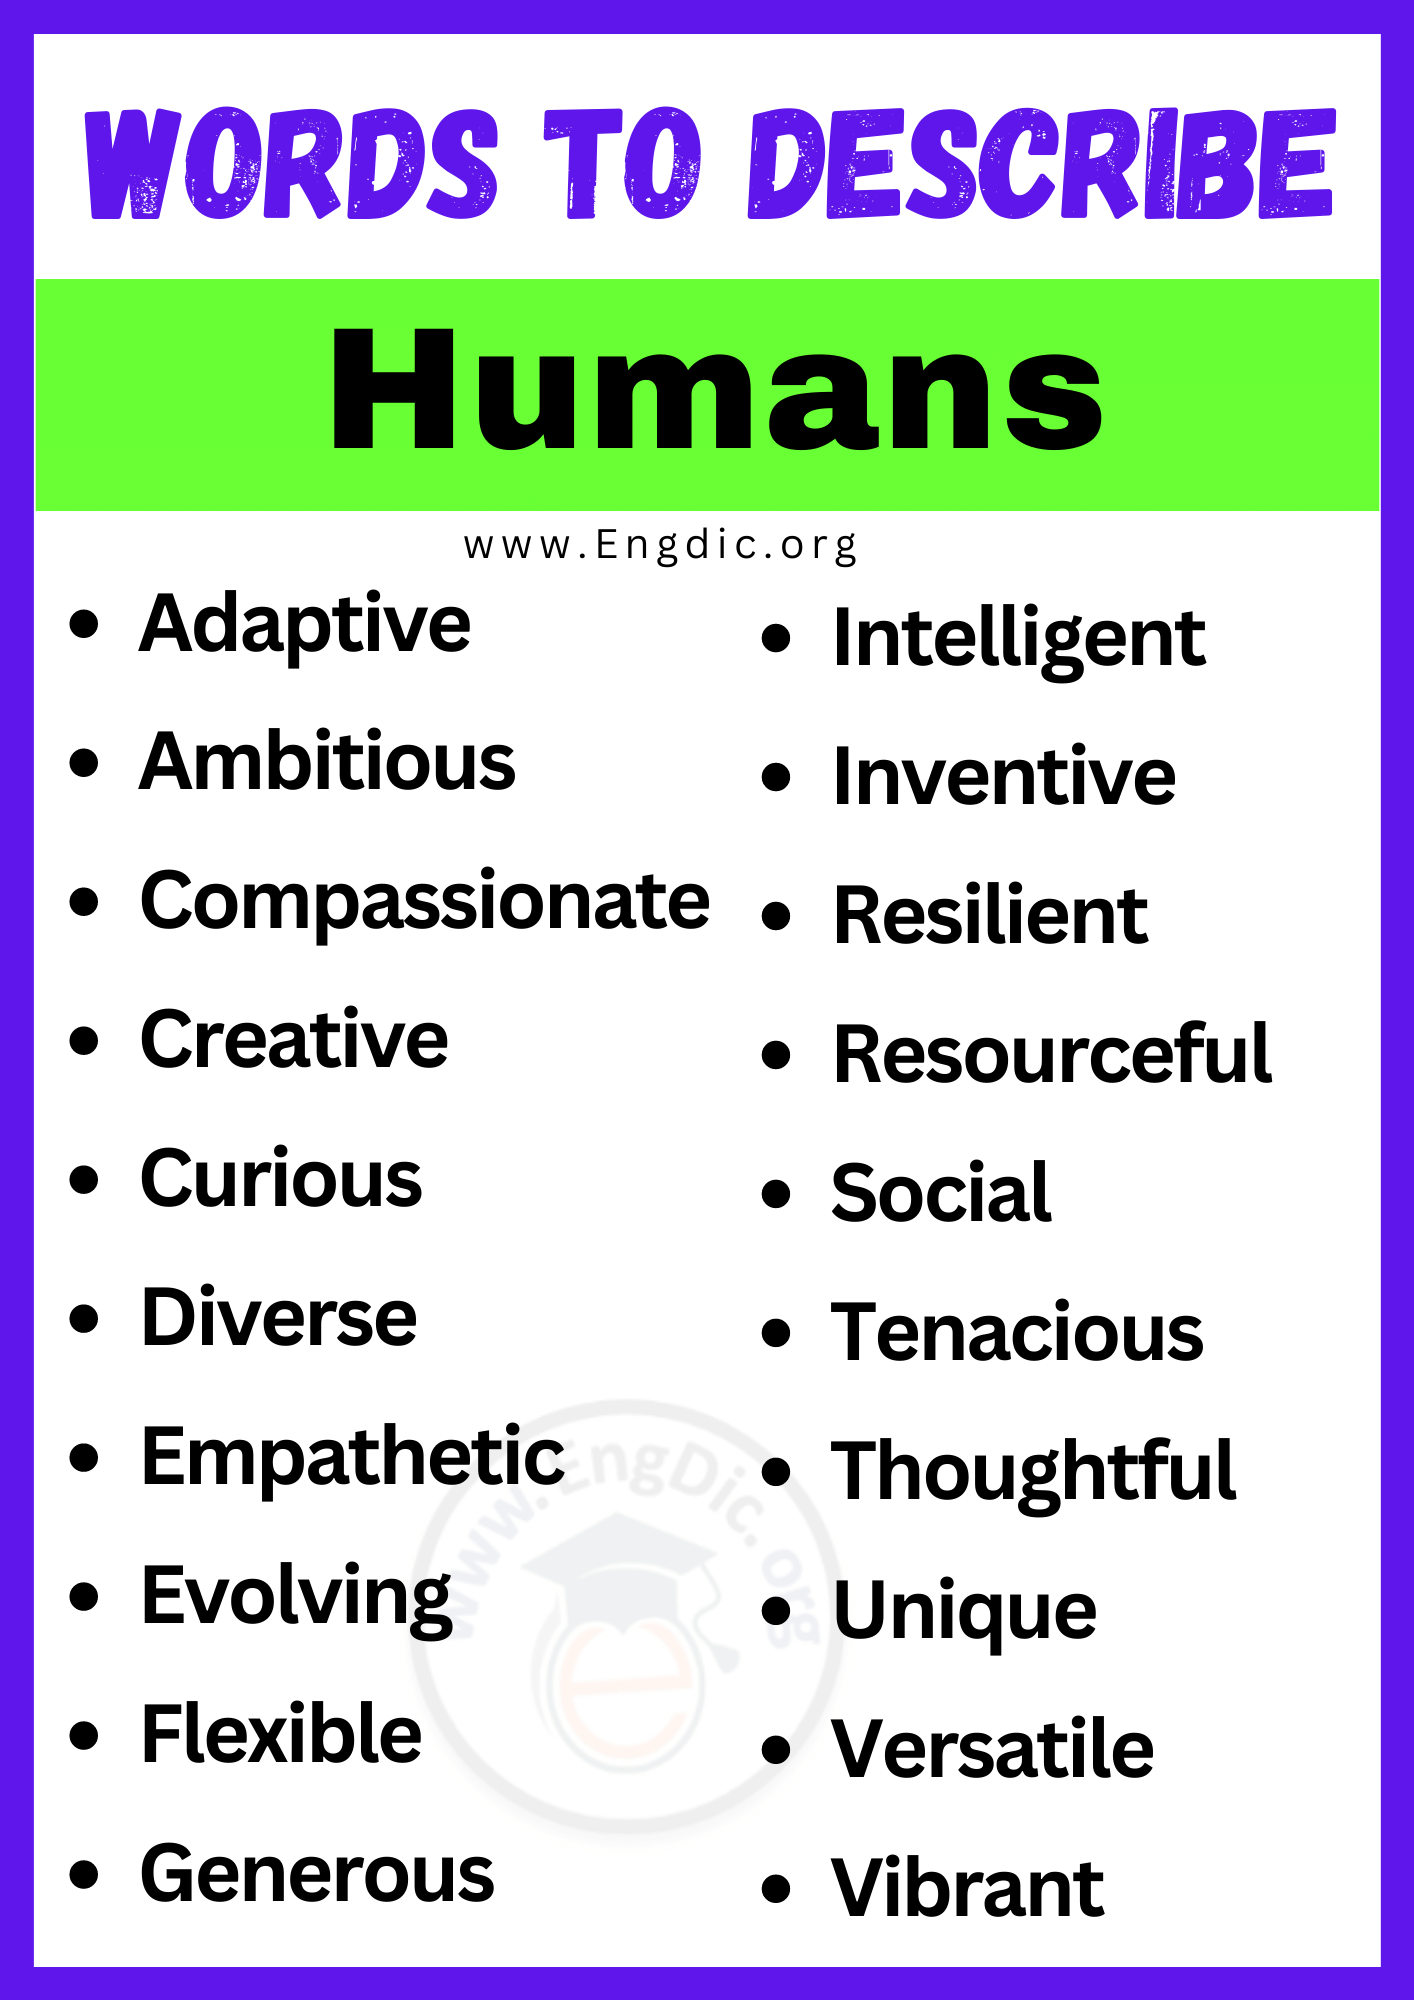 Words to Describe Humans